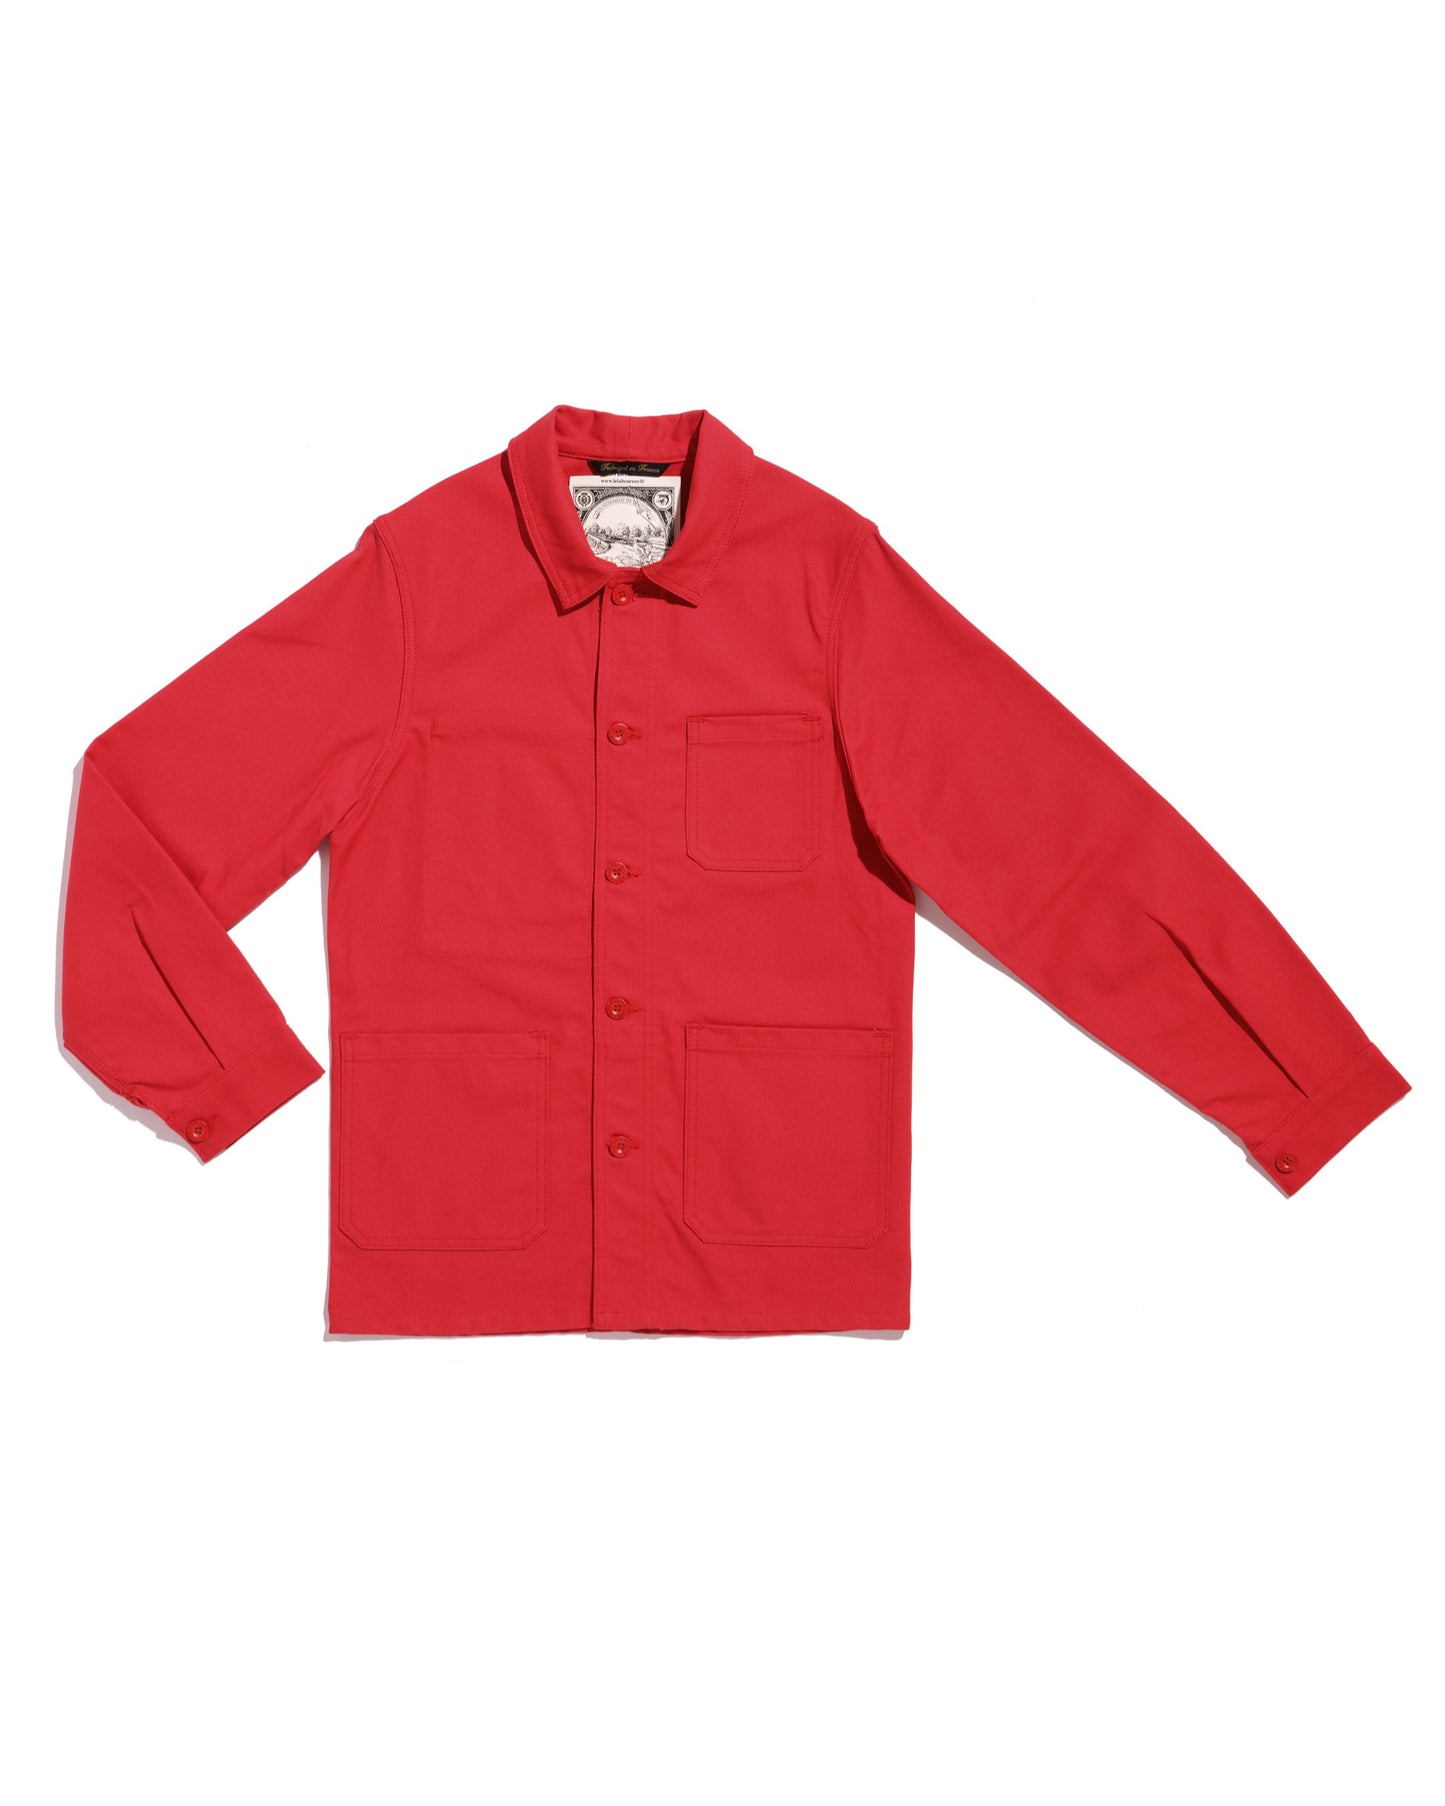 Le Laboureur red work jacket